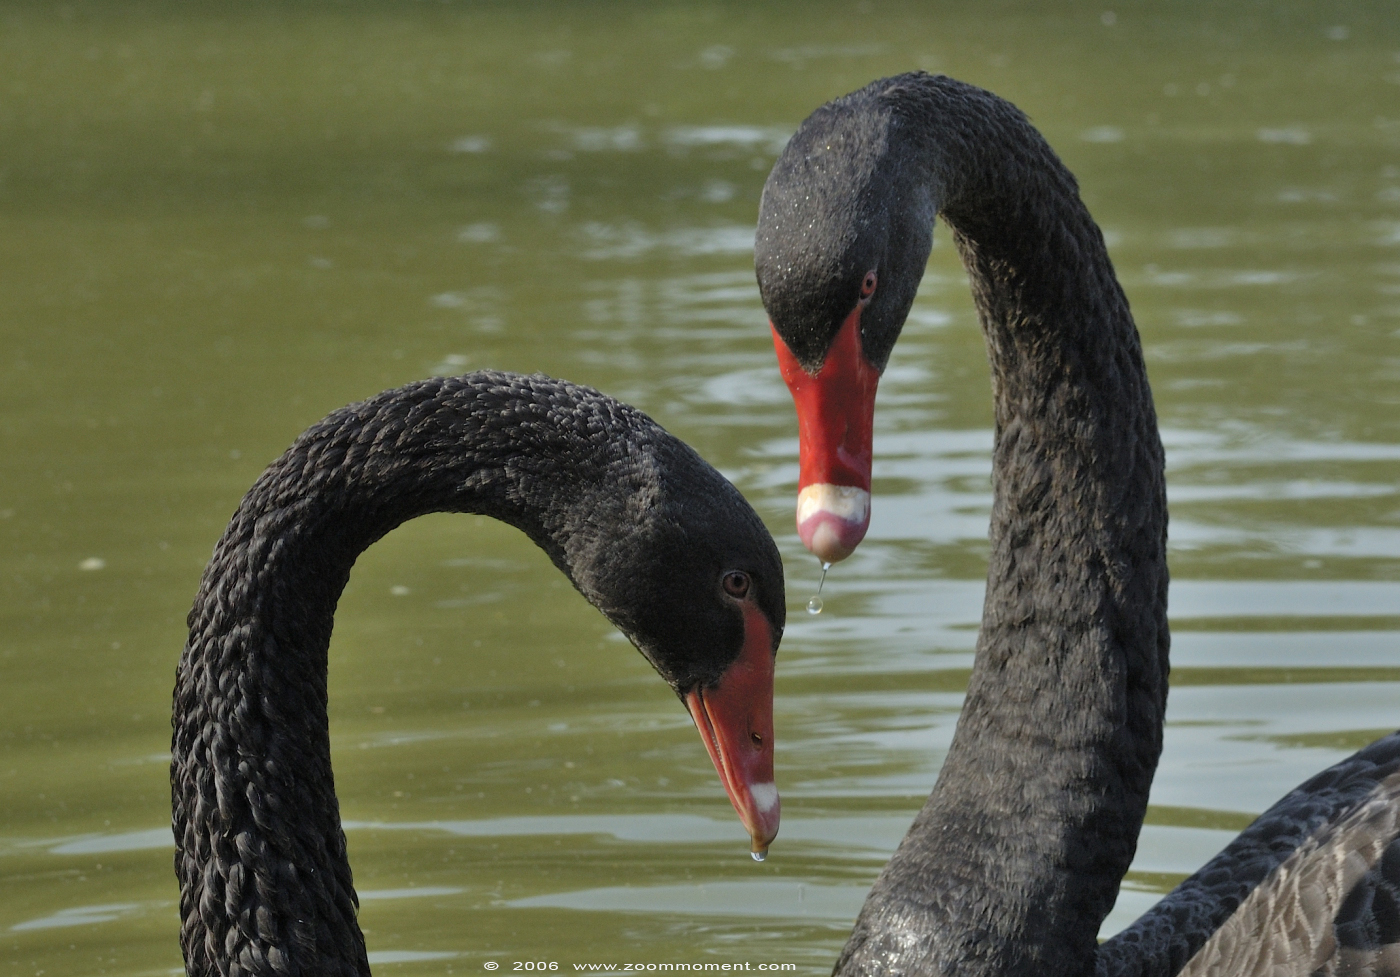 zwarte zwaan  ( Cygnus atratus )  black swan
Keywords: Olmen zoo Belgie Belgium zwarte zwaan swan Cygnus atratus vogel bird